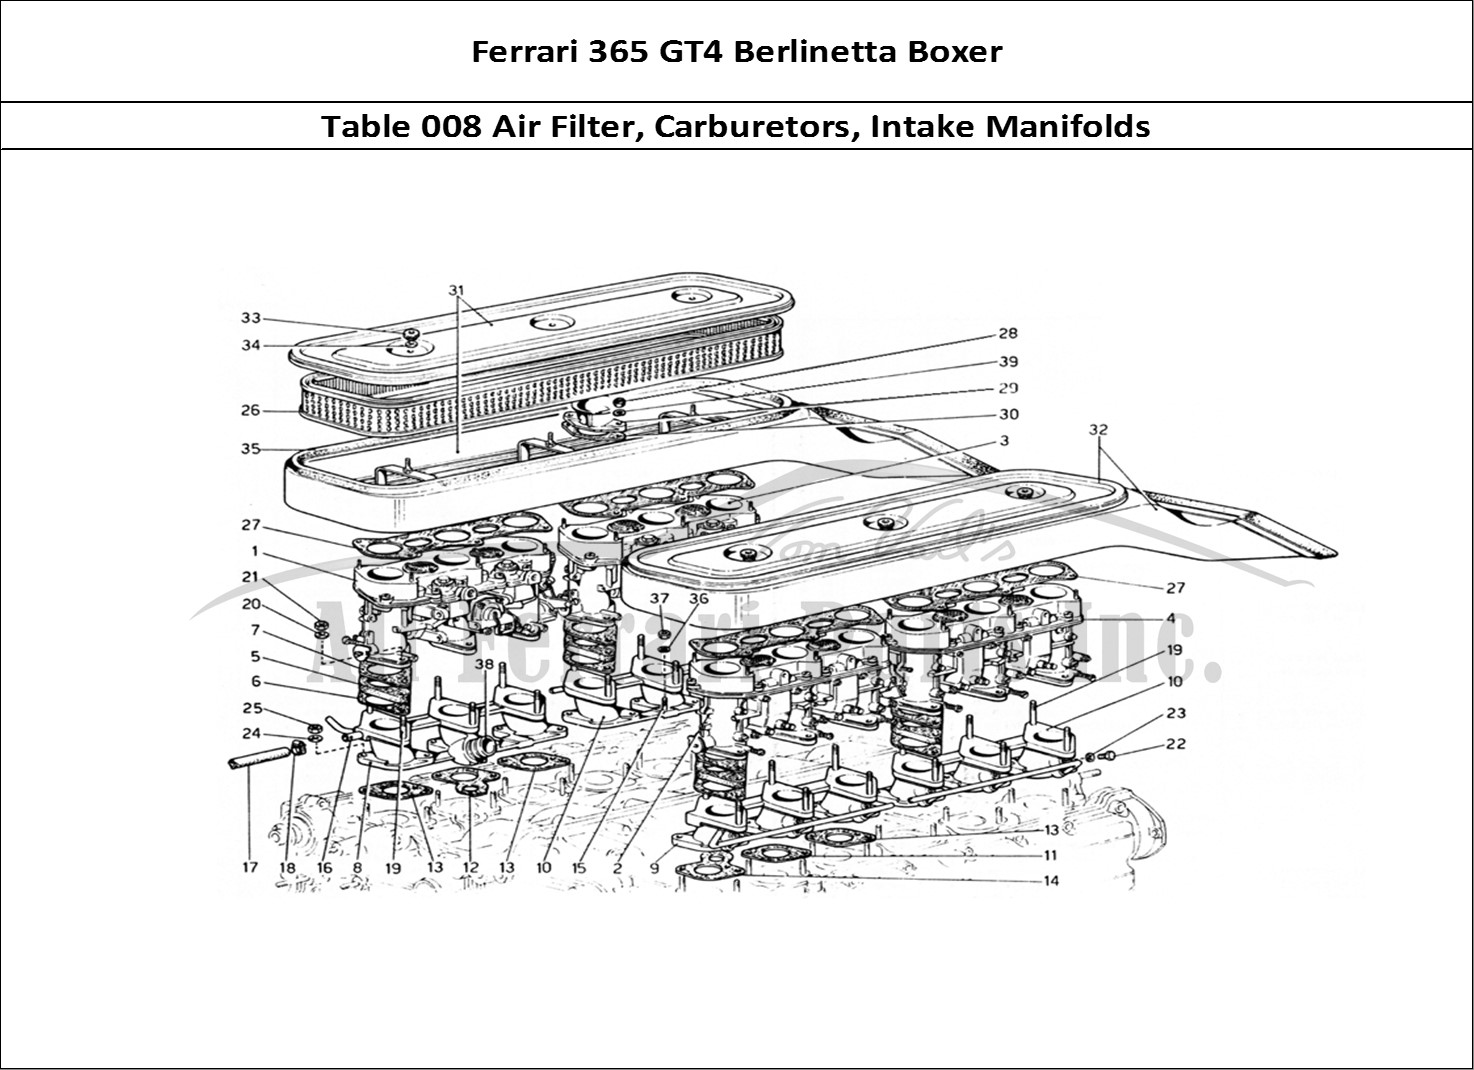 Ferrari Parts Ferrari 365 GT4 Berlinetta Boxer Page 008 Air Intakes and Manifolds